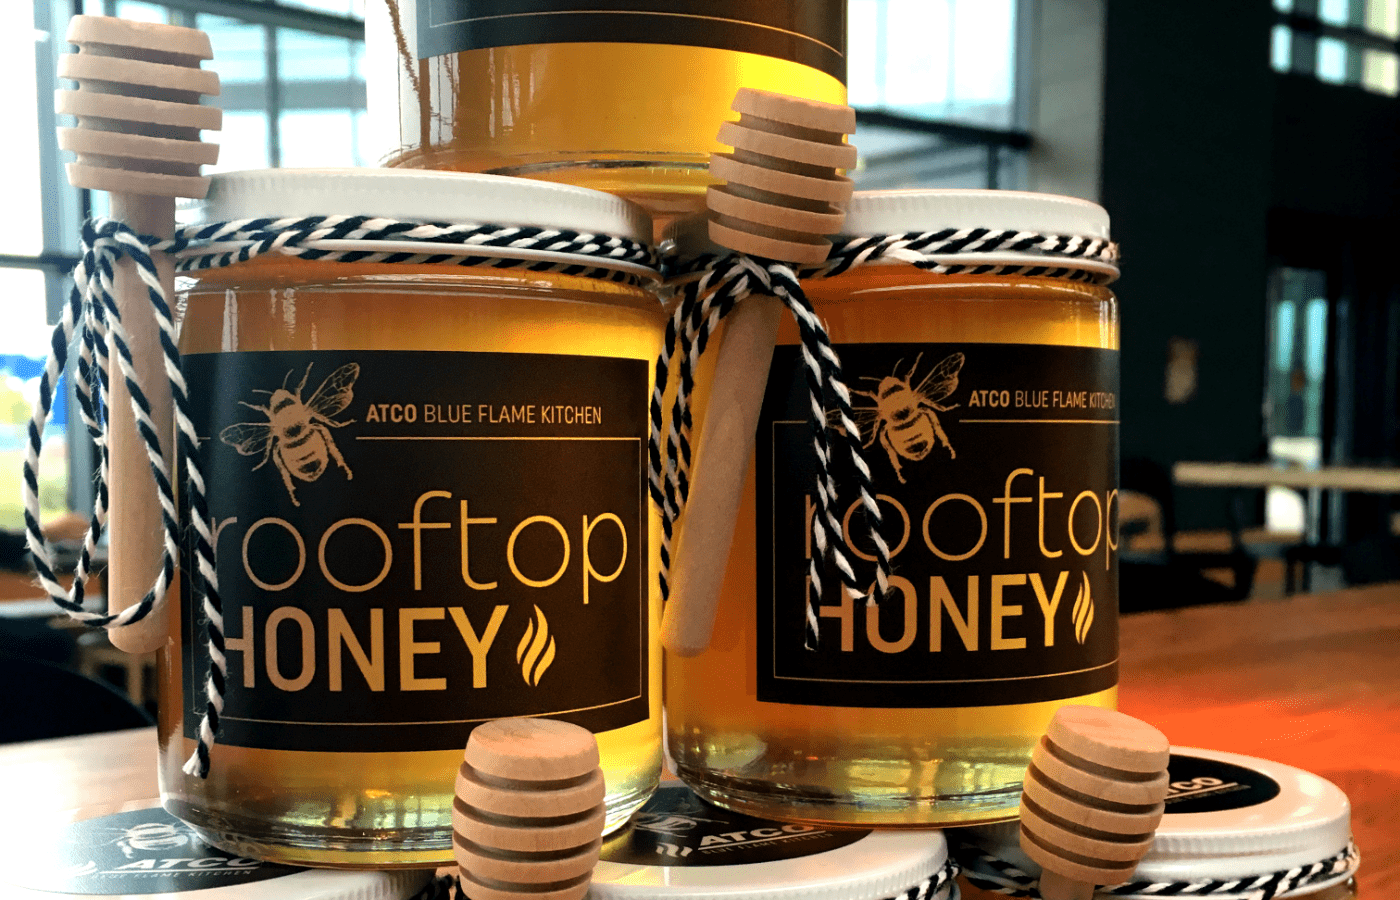 BFK Rooftop Honey